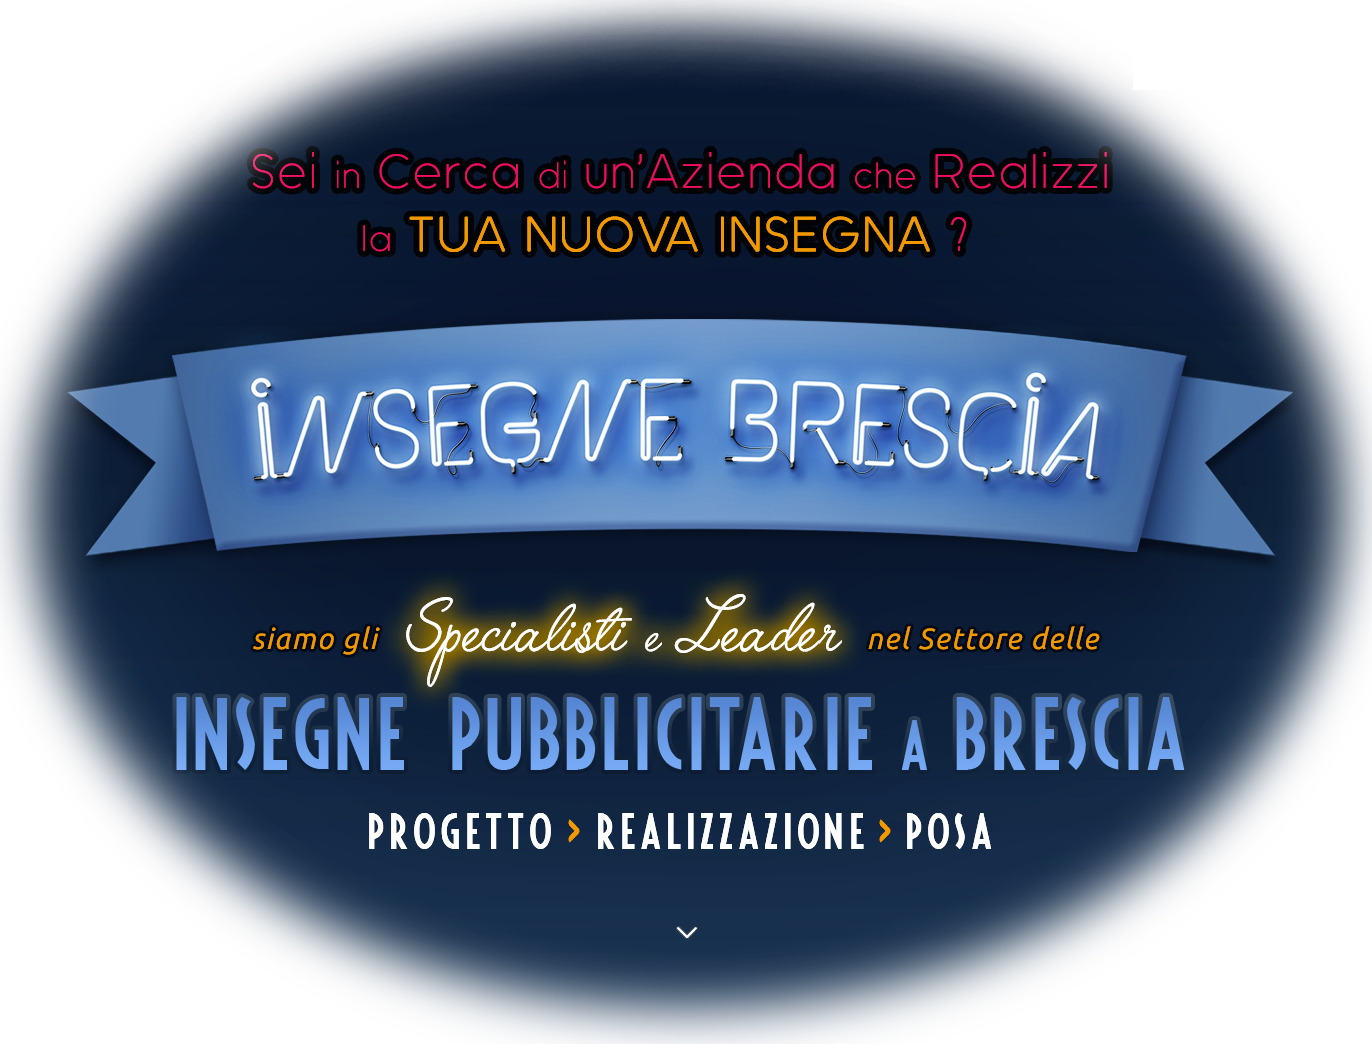 Insegne pubblicitarie a Brescia